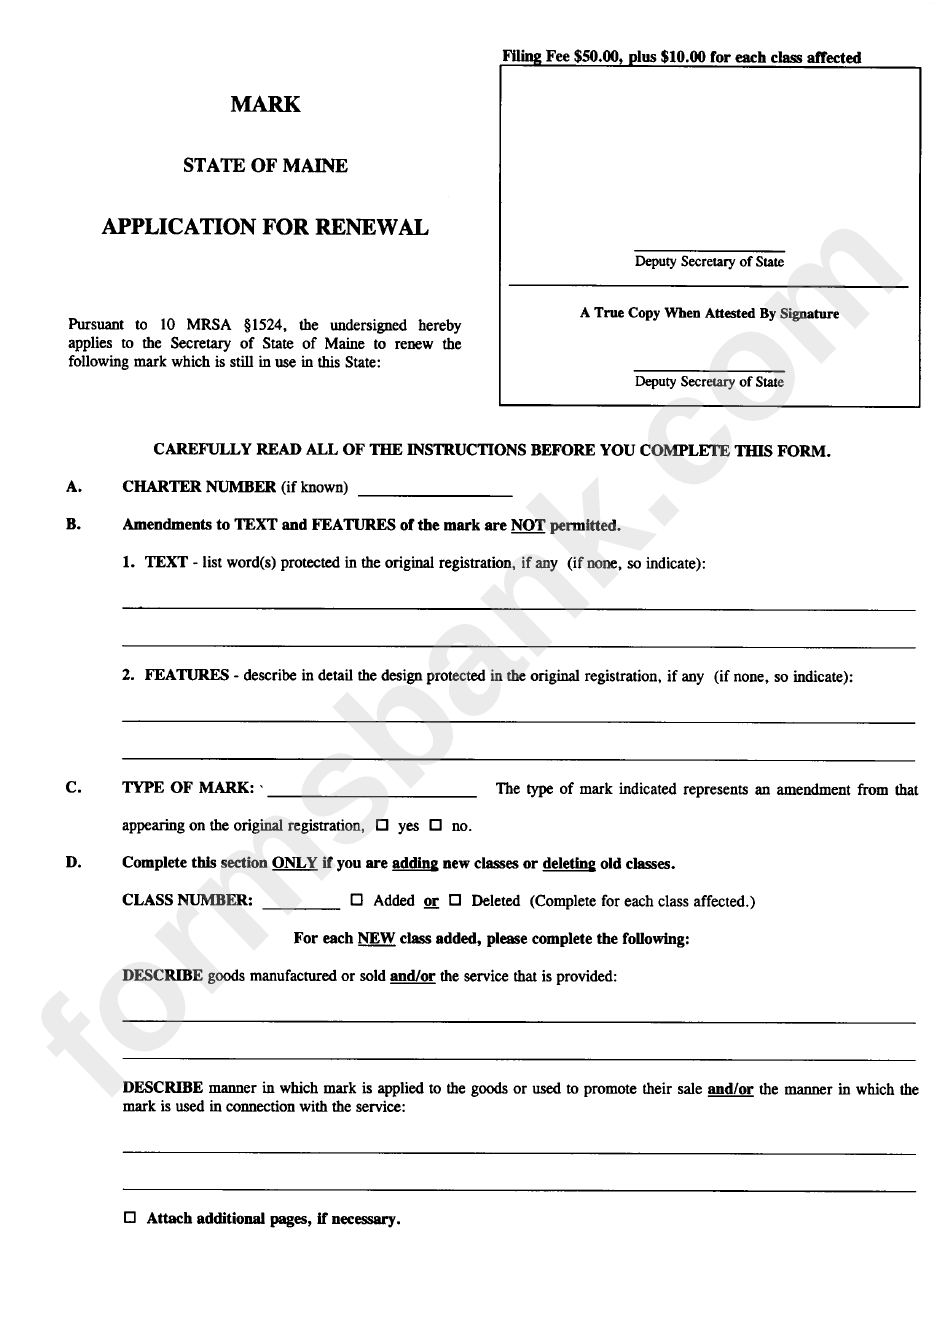 Form Mark-2 - Application For Renewal